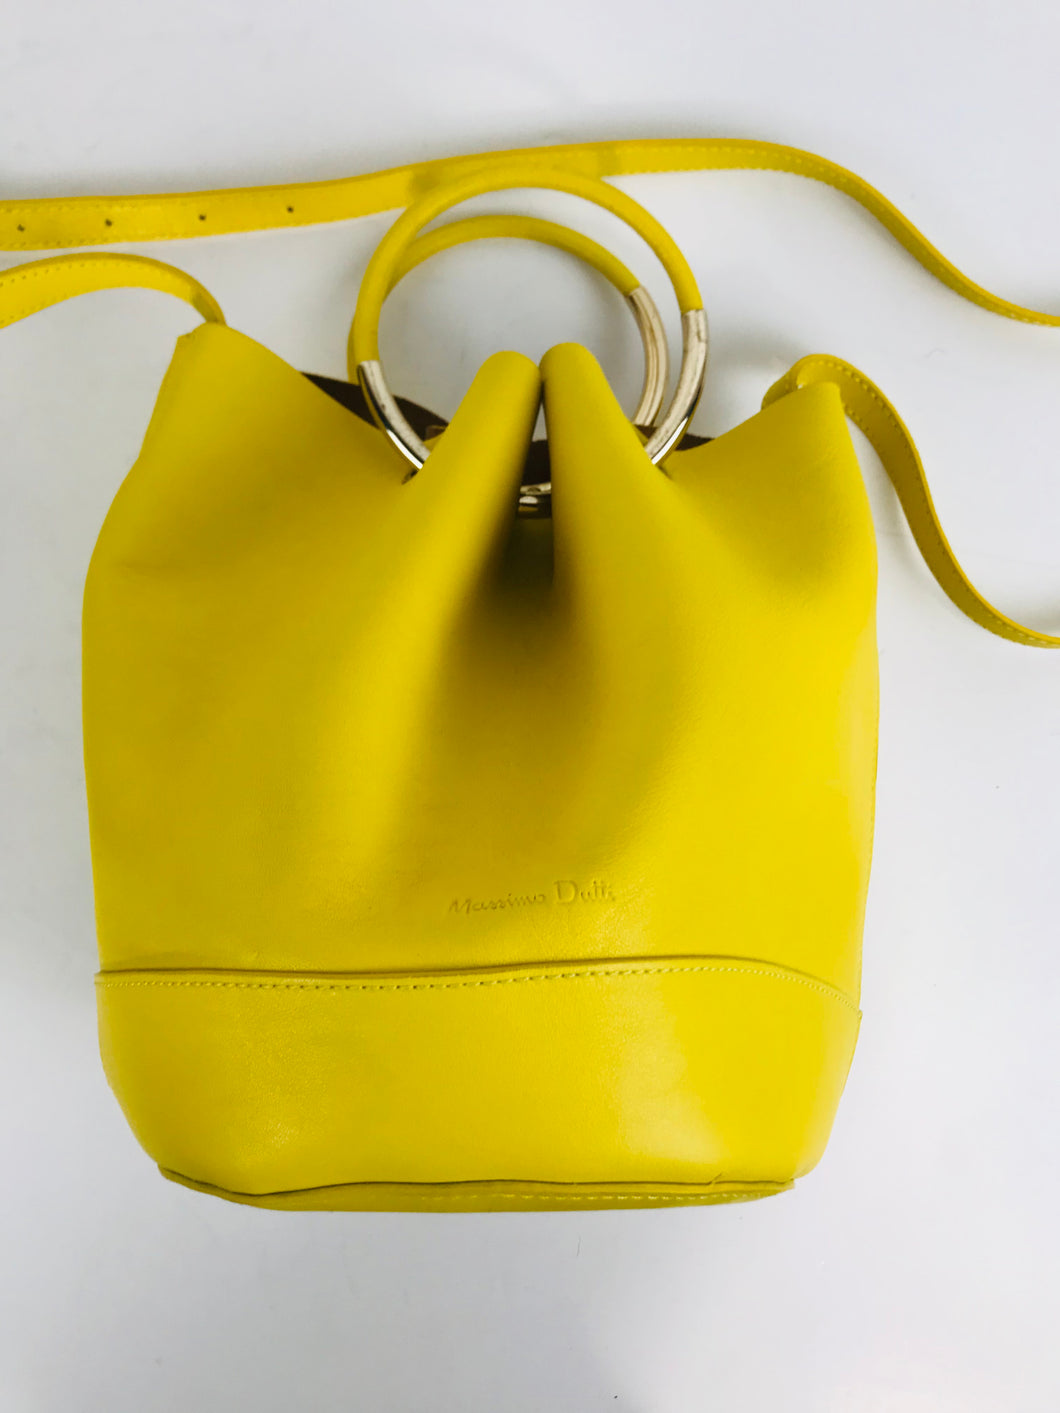 Massimo Dutti Women's Leather Shoulder Bag | OS | Yellow